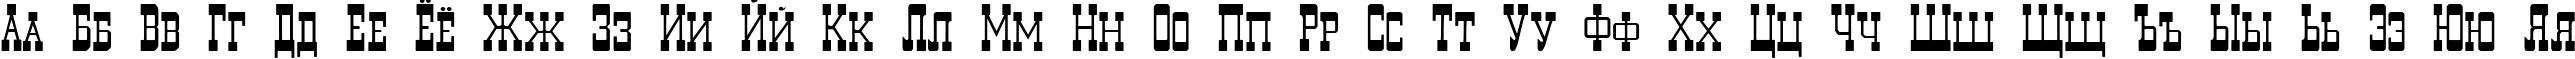 Пример написания русского алфавита шрифтом Decree Thin